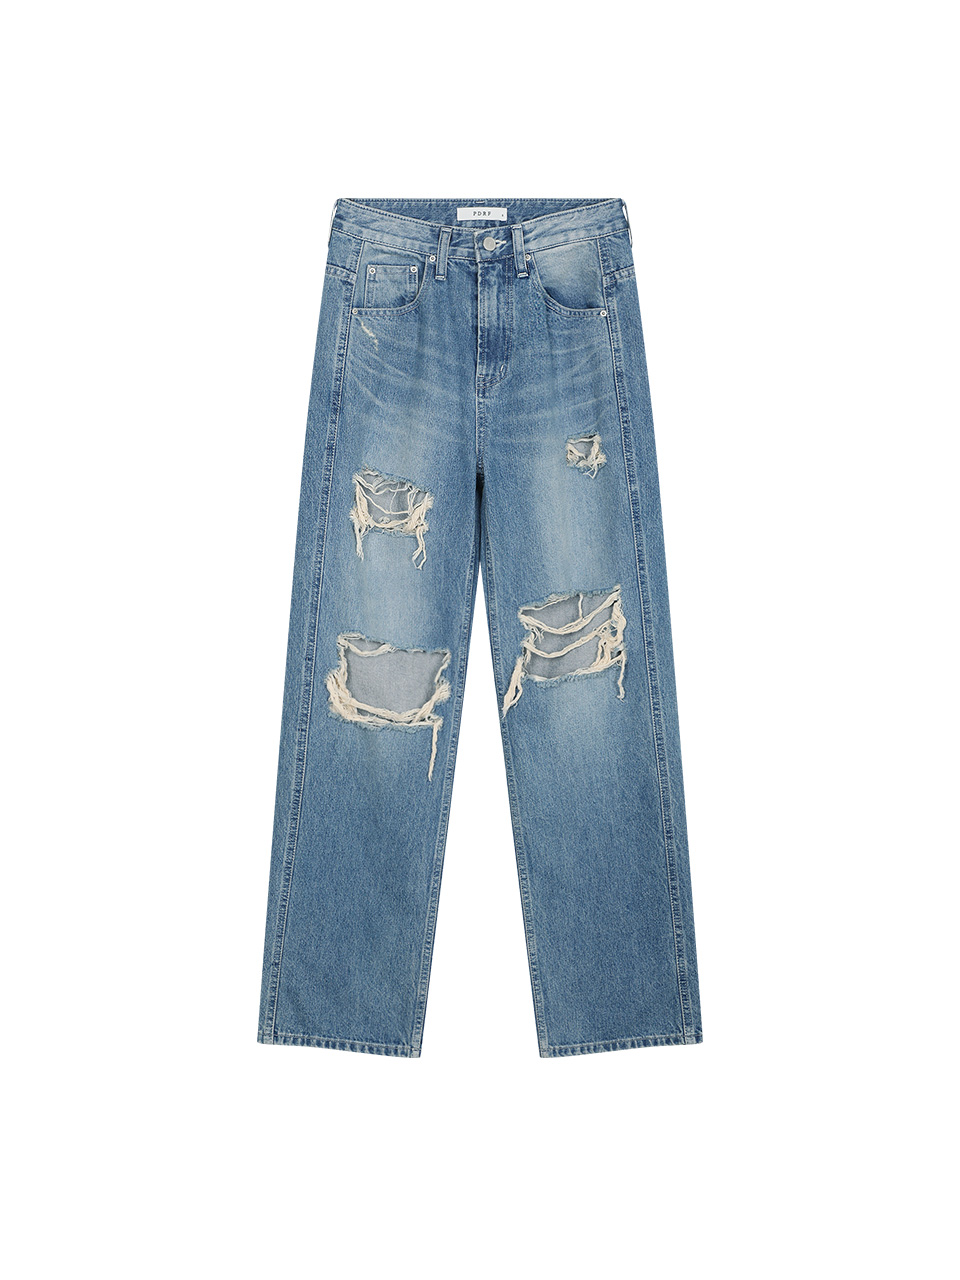 [WIDE] Jack Damage Jeans